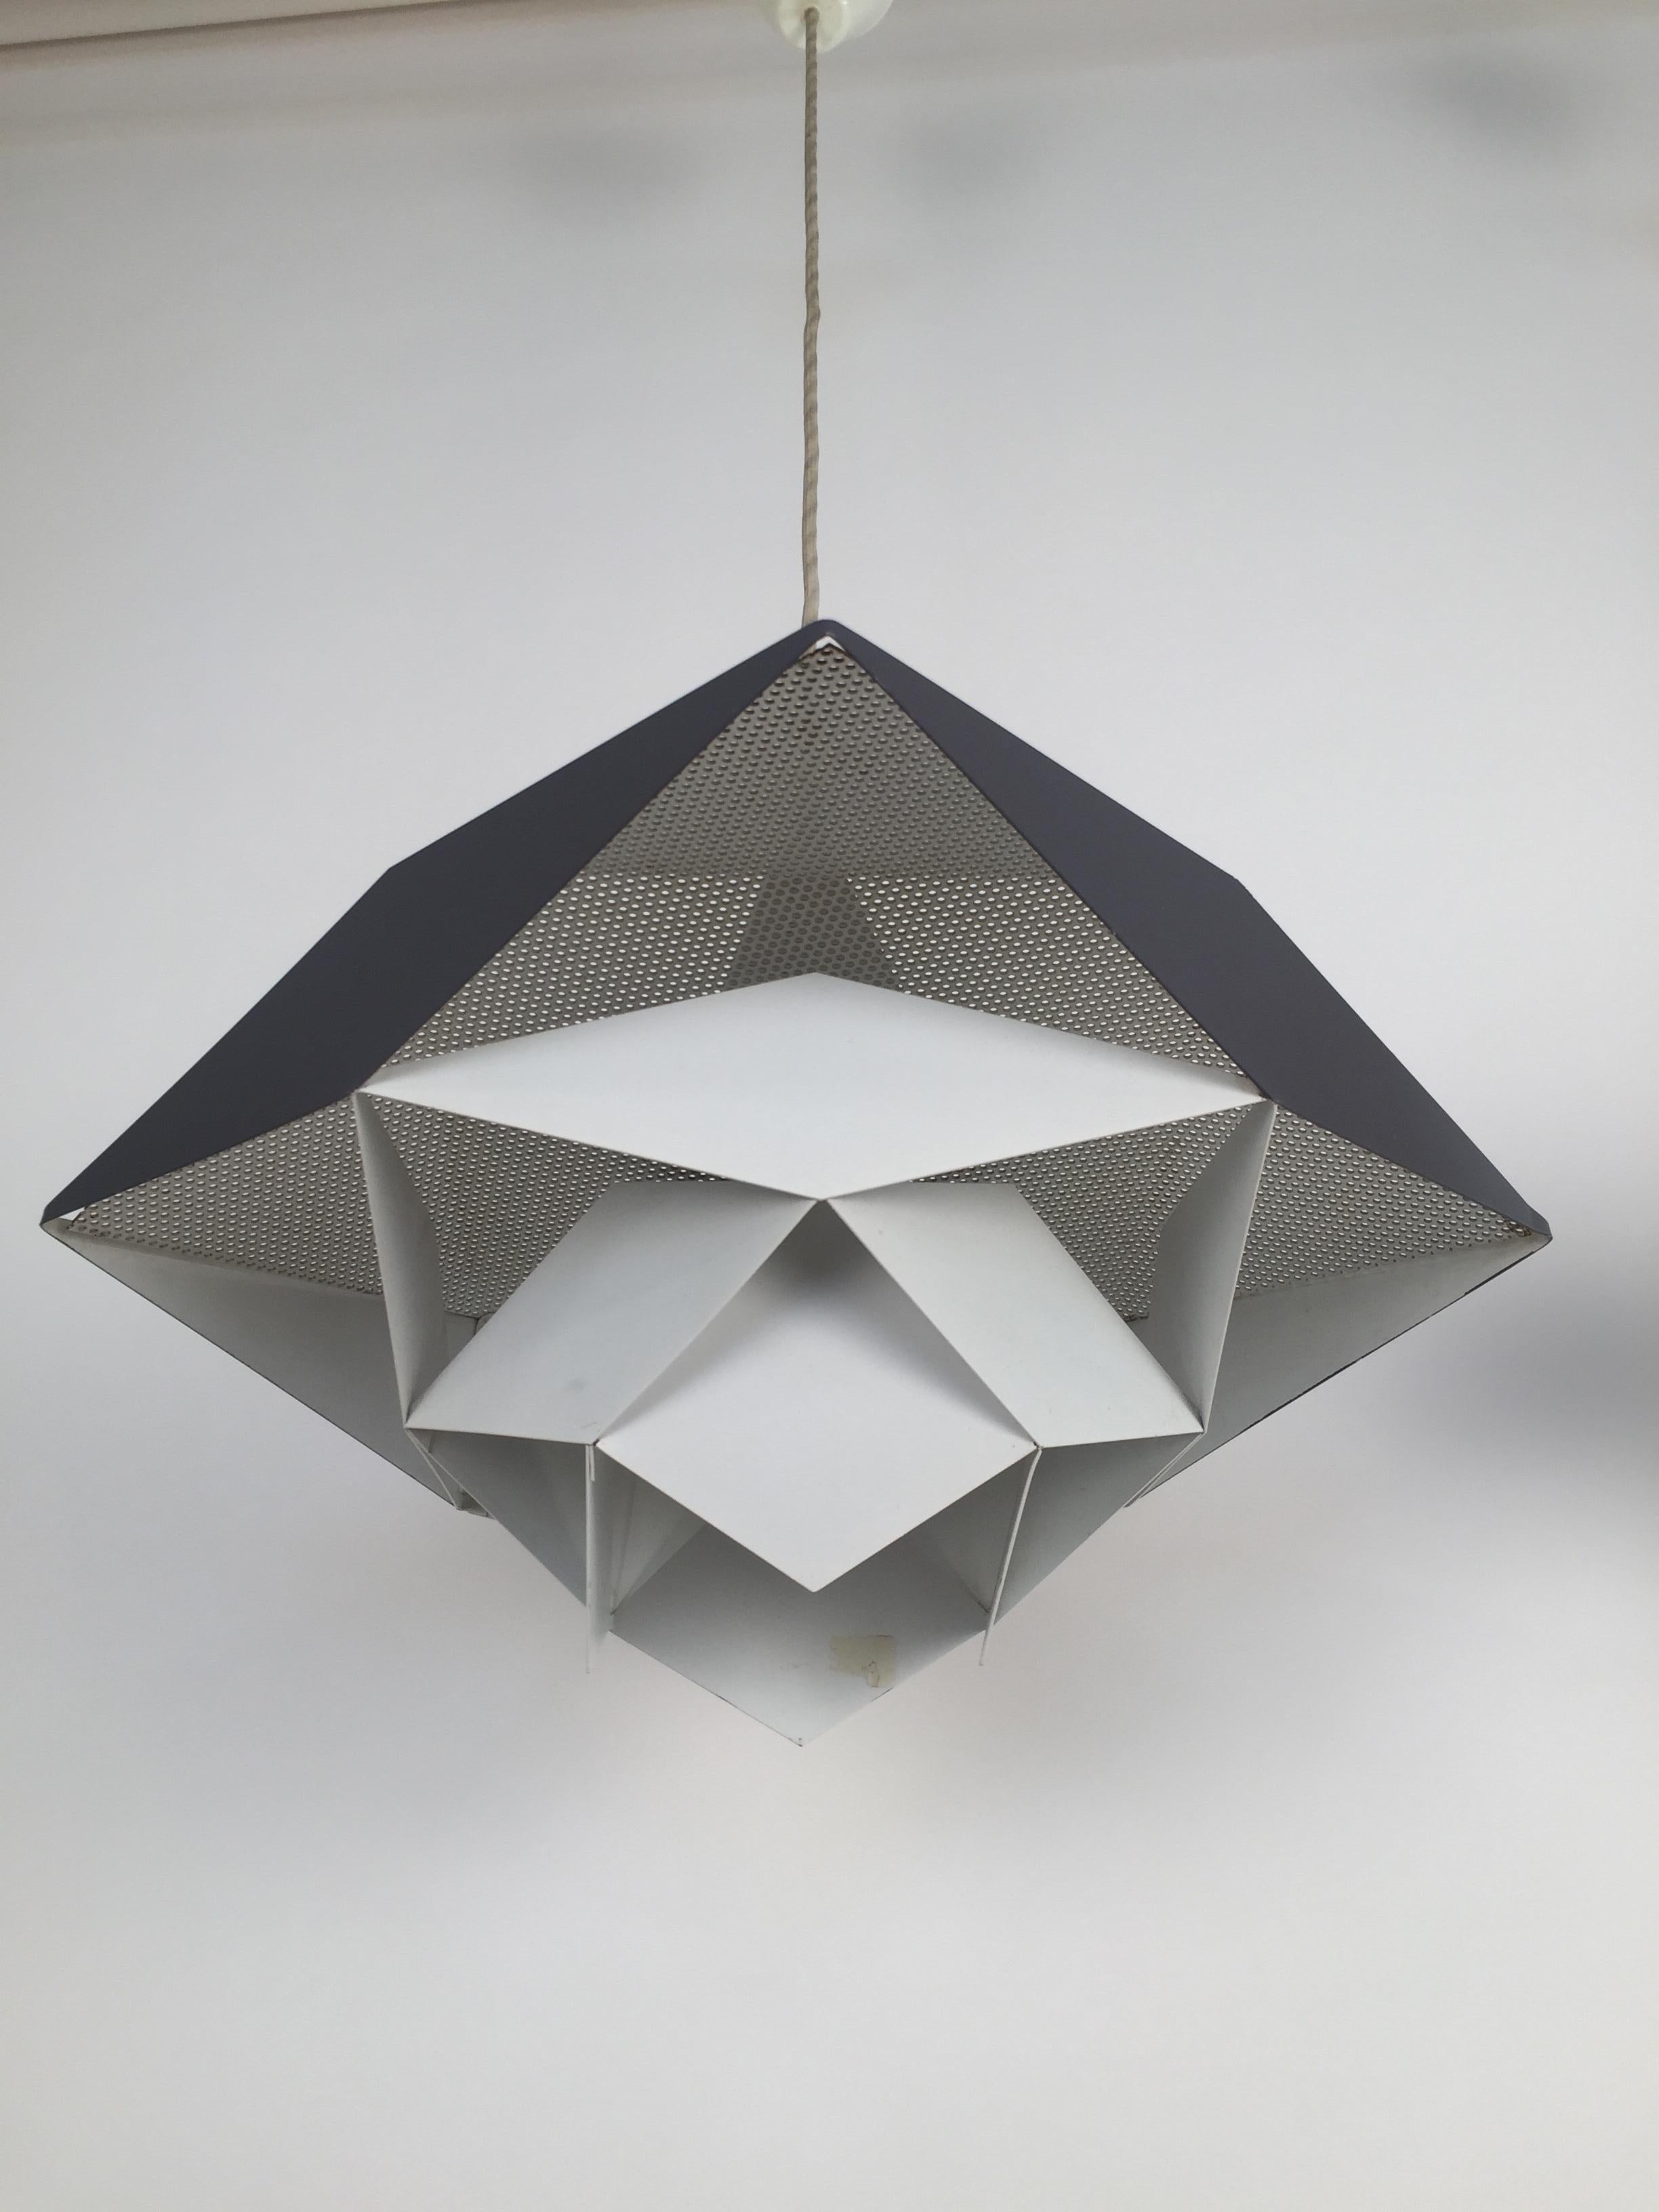 Metal Preben Dahl Pair of Ceiling Lamps Model “Sinfoni” by Hans Folsgaard, 1960 For Sale